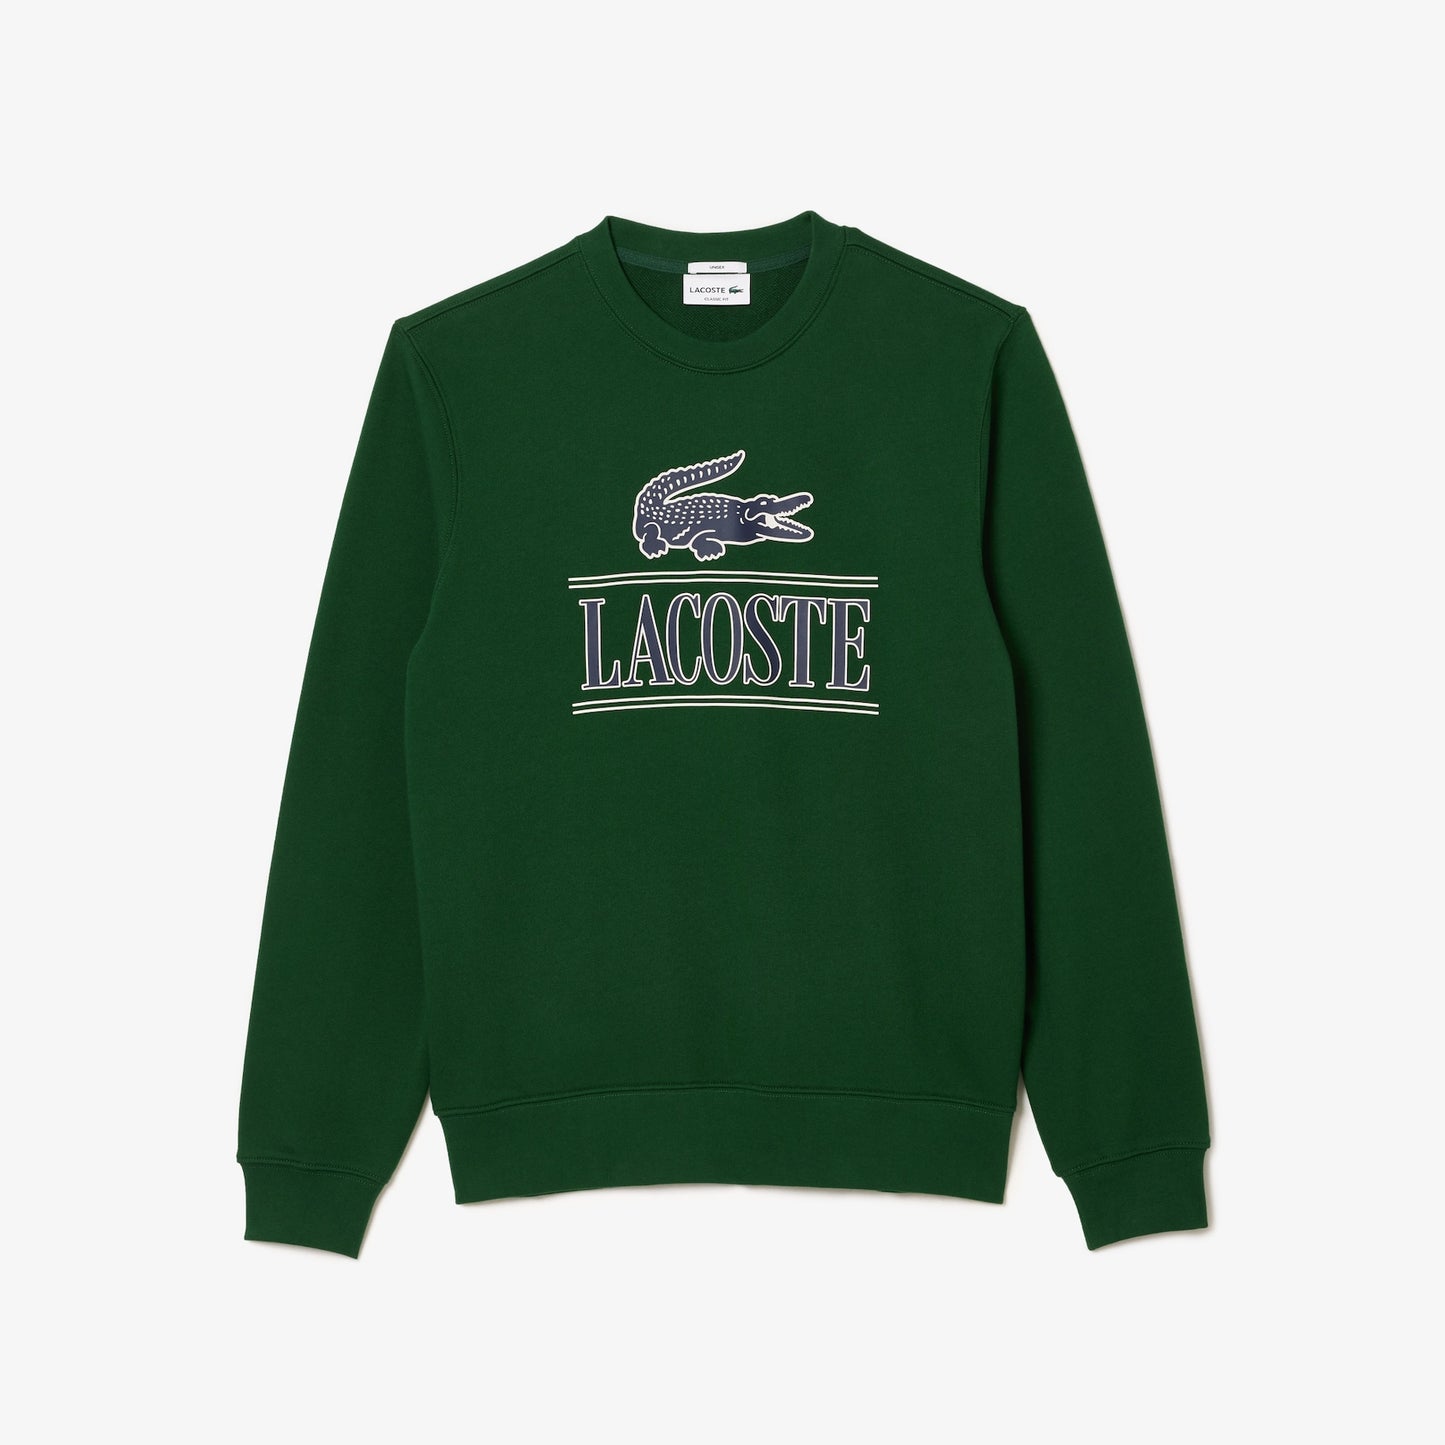 Lacoste - Cotton Fleece Branded Jogging Sweatshirt - Green